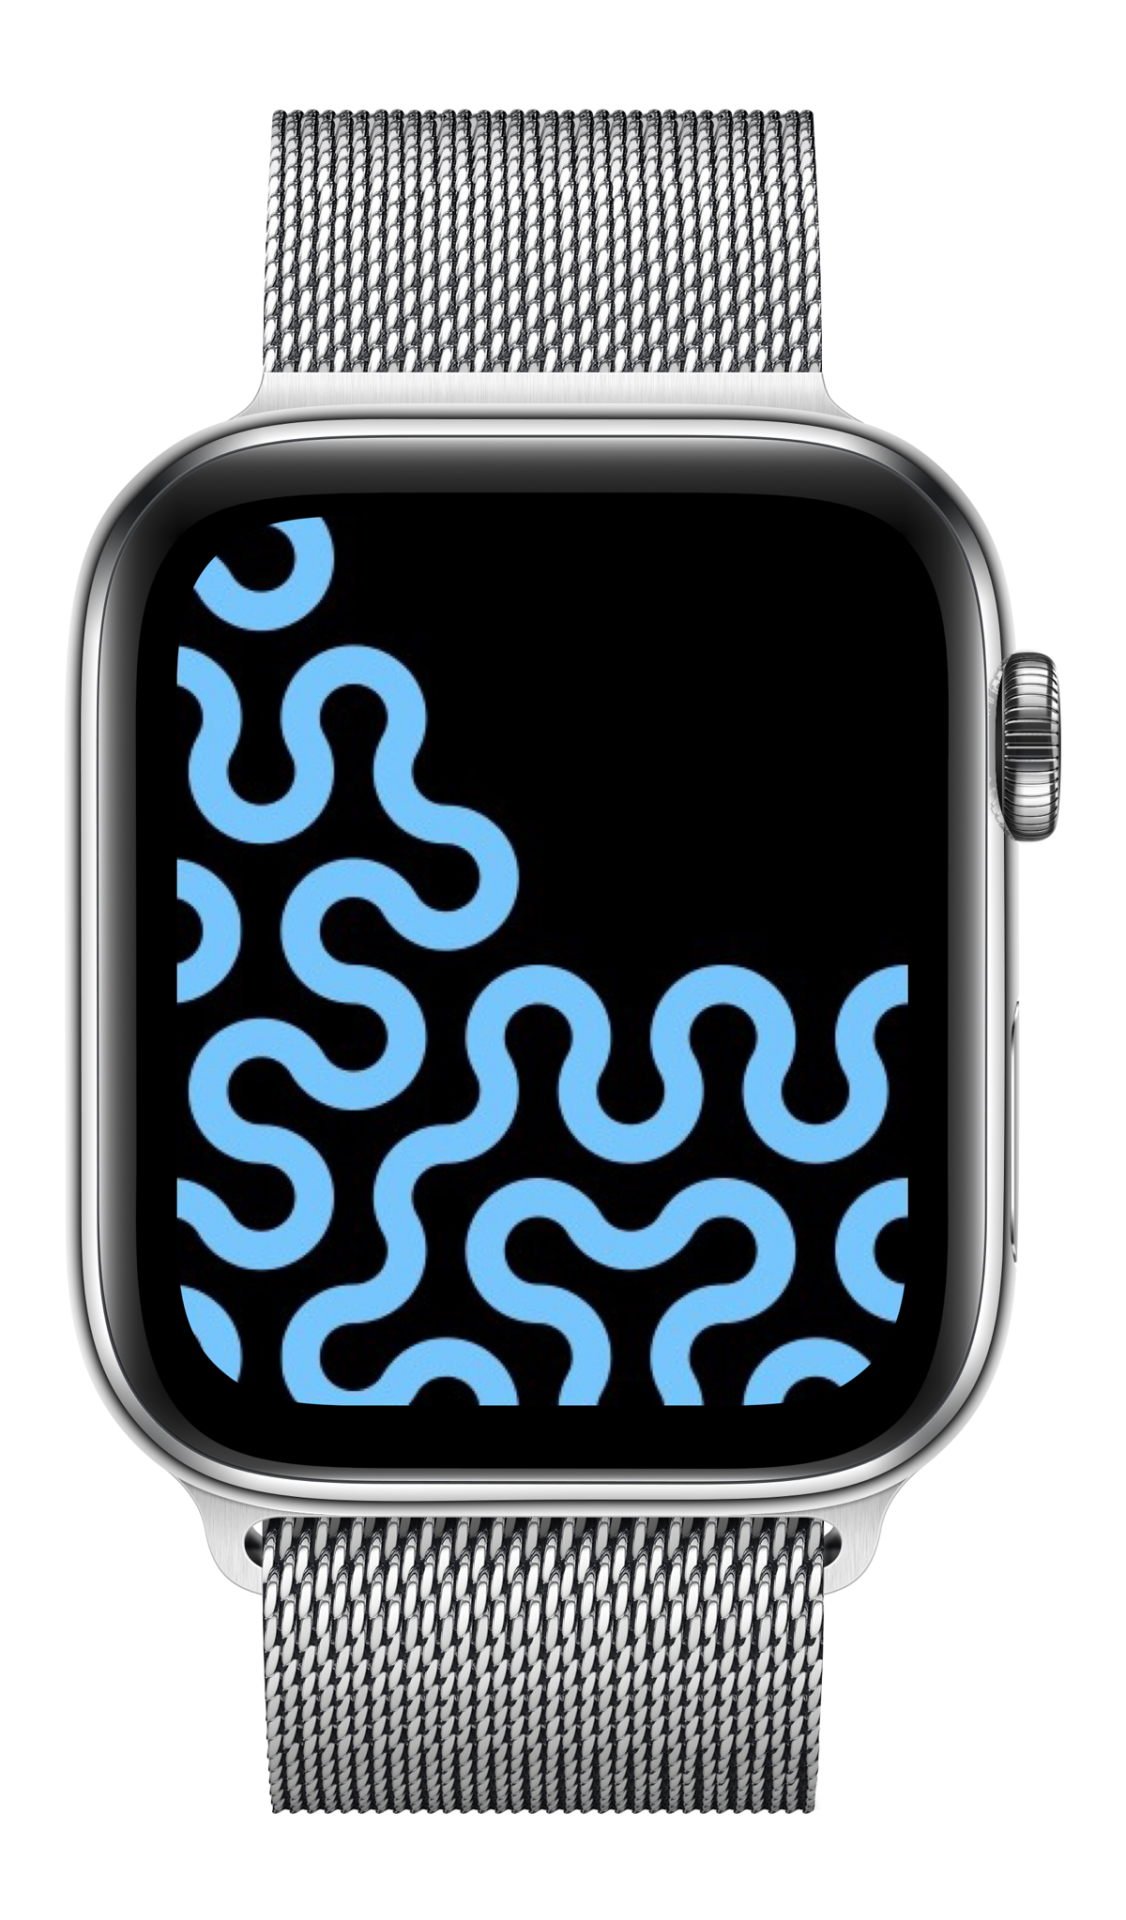 Cute Apple Watch Backgrounds - Ripperroo Wallpaper